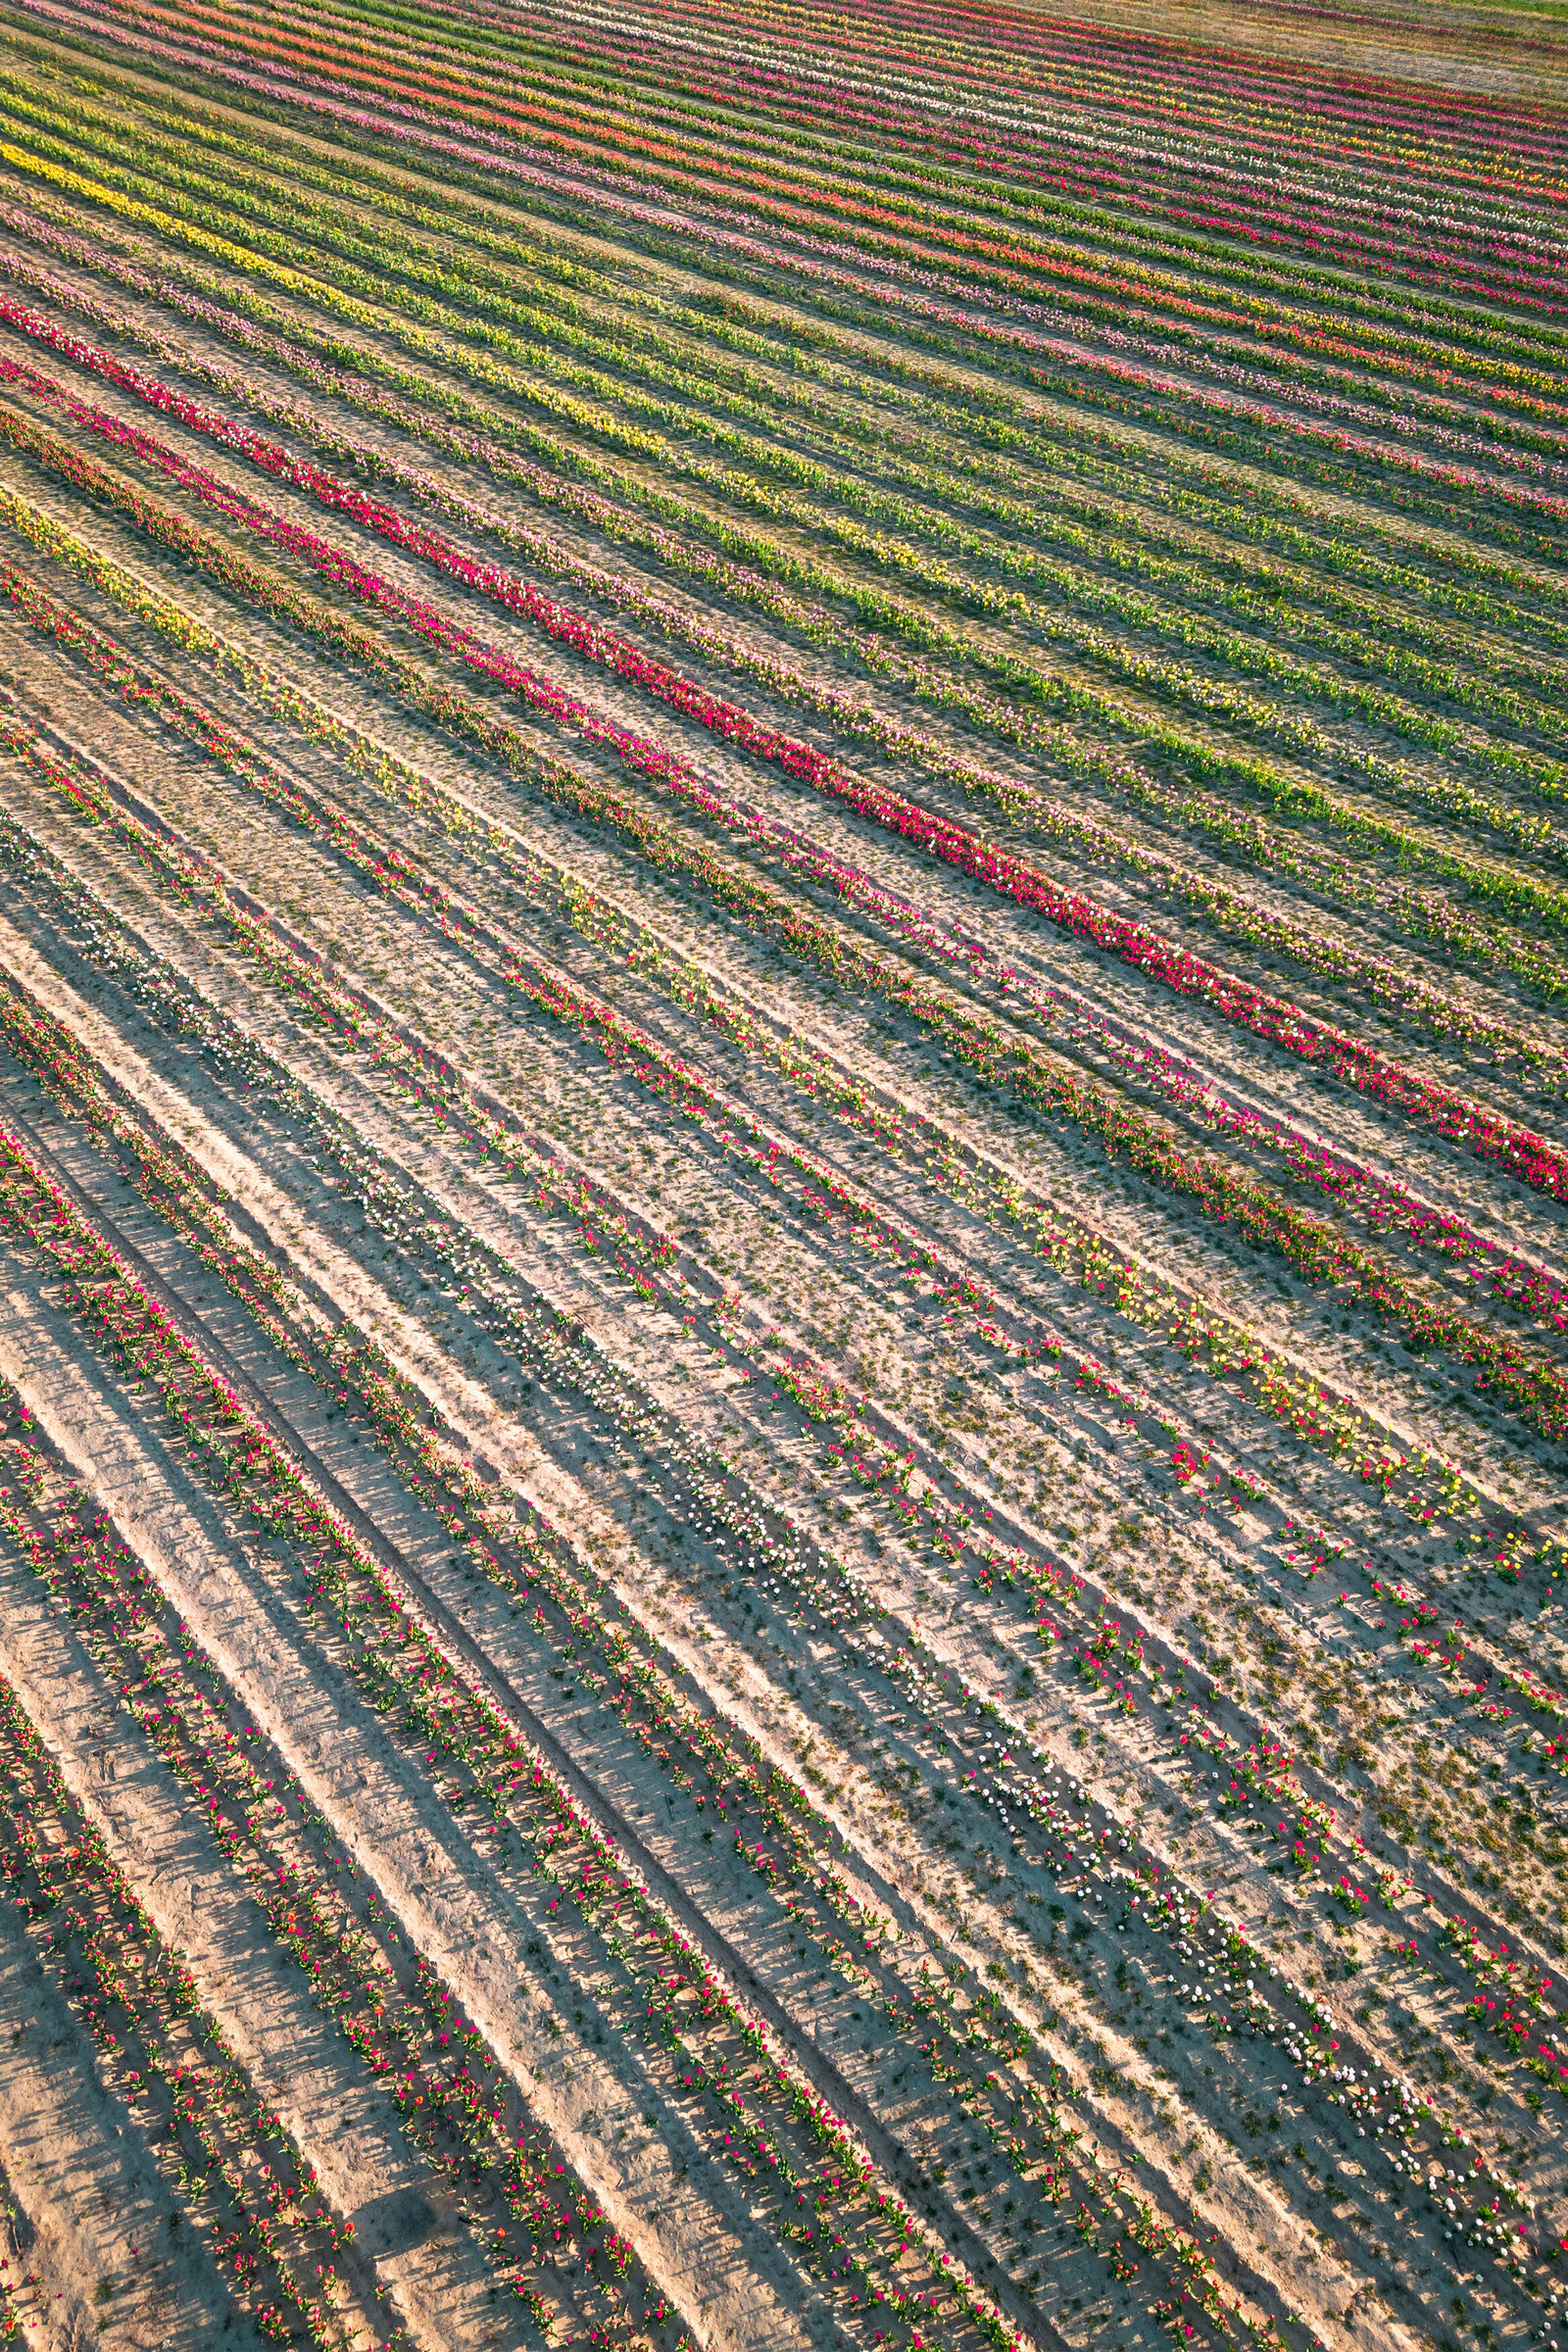 Aerial Waterdrinker Family Farm Tulips Erin Donahue niredonahue